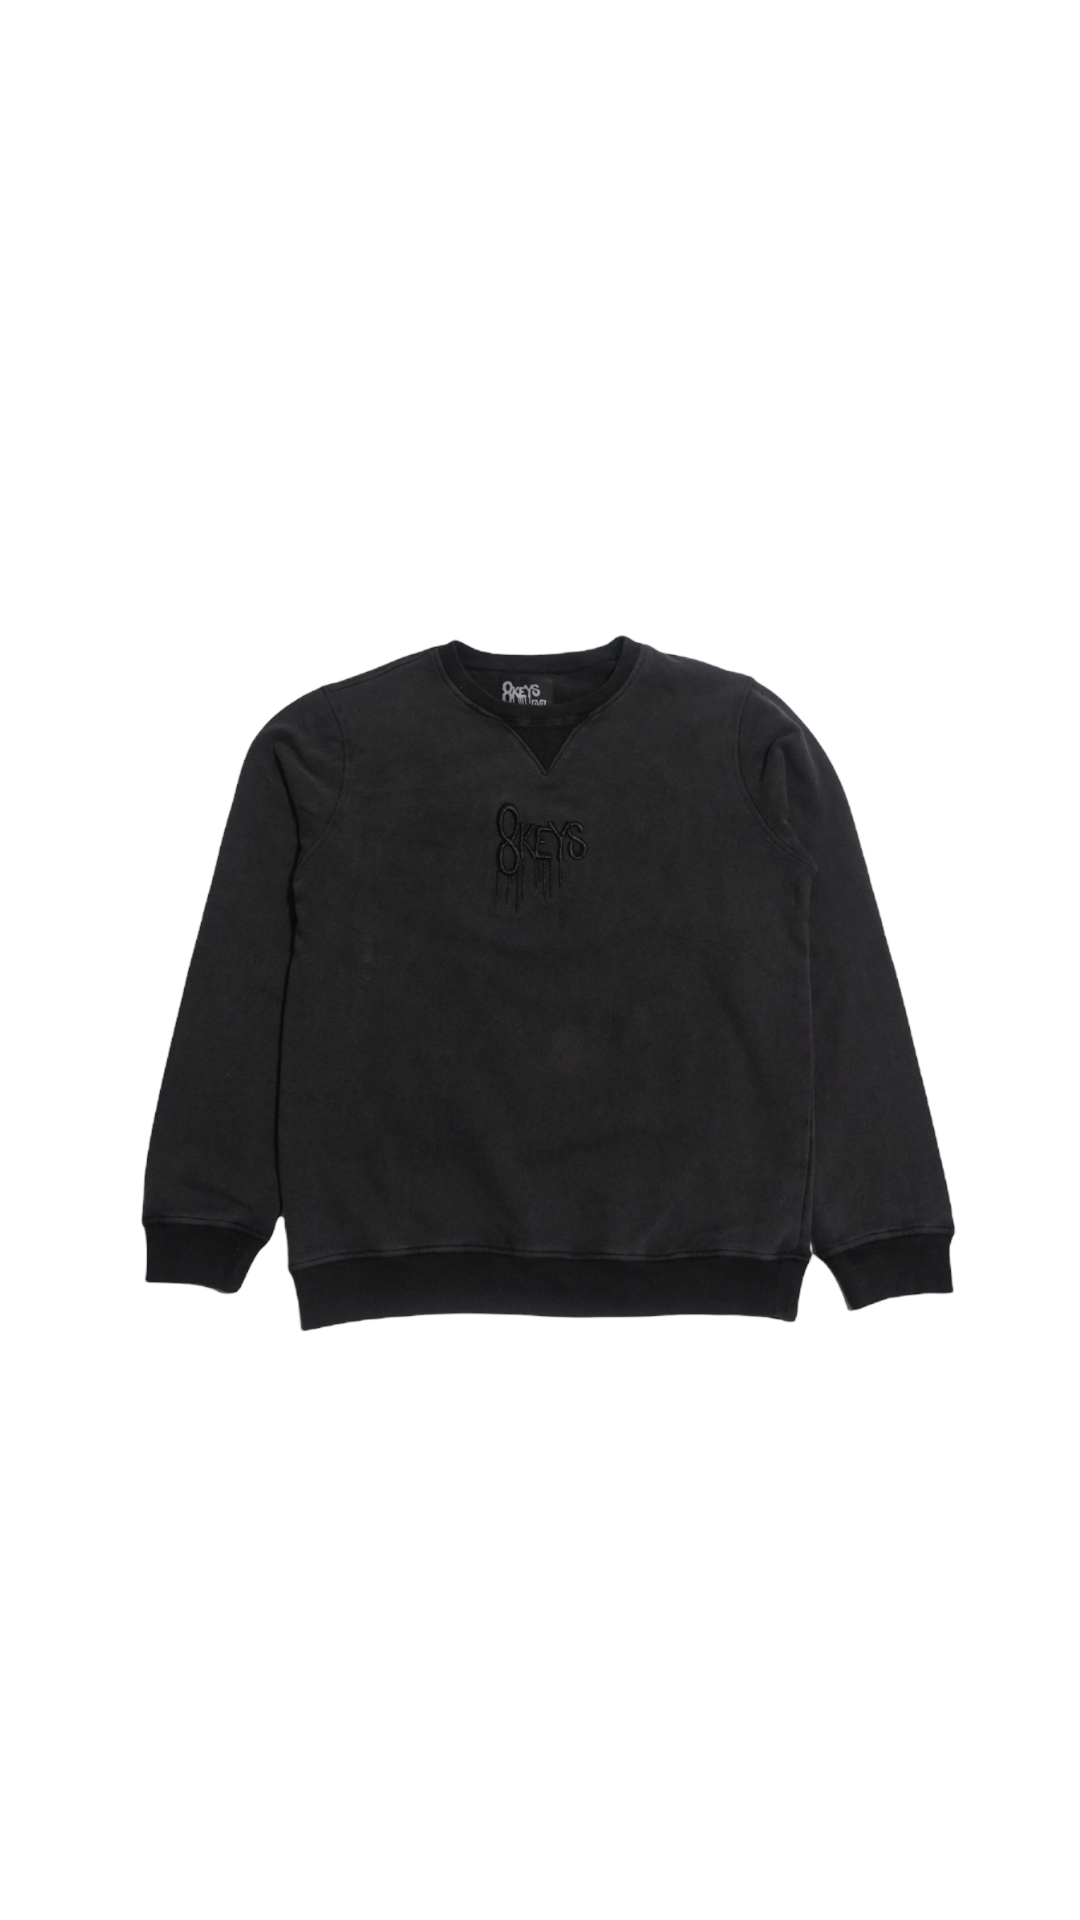 Black acid wash crewneck sweater